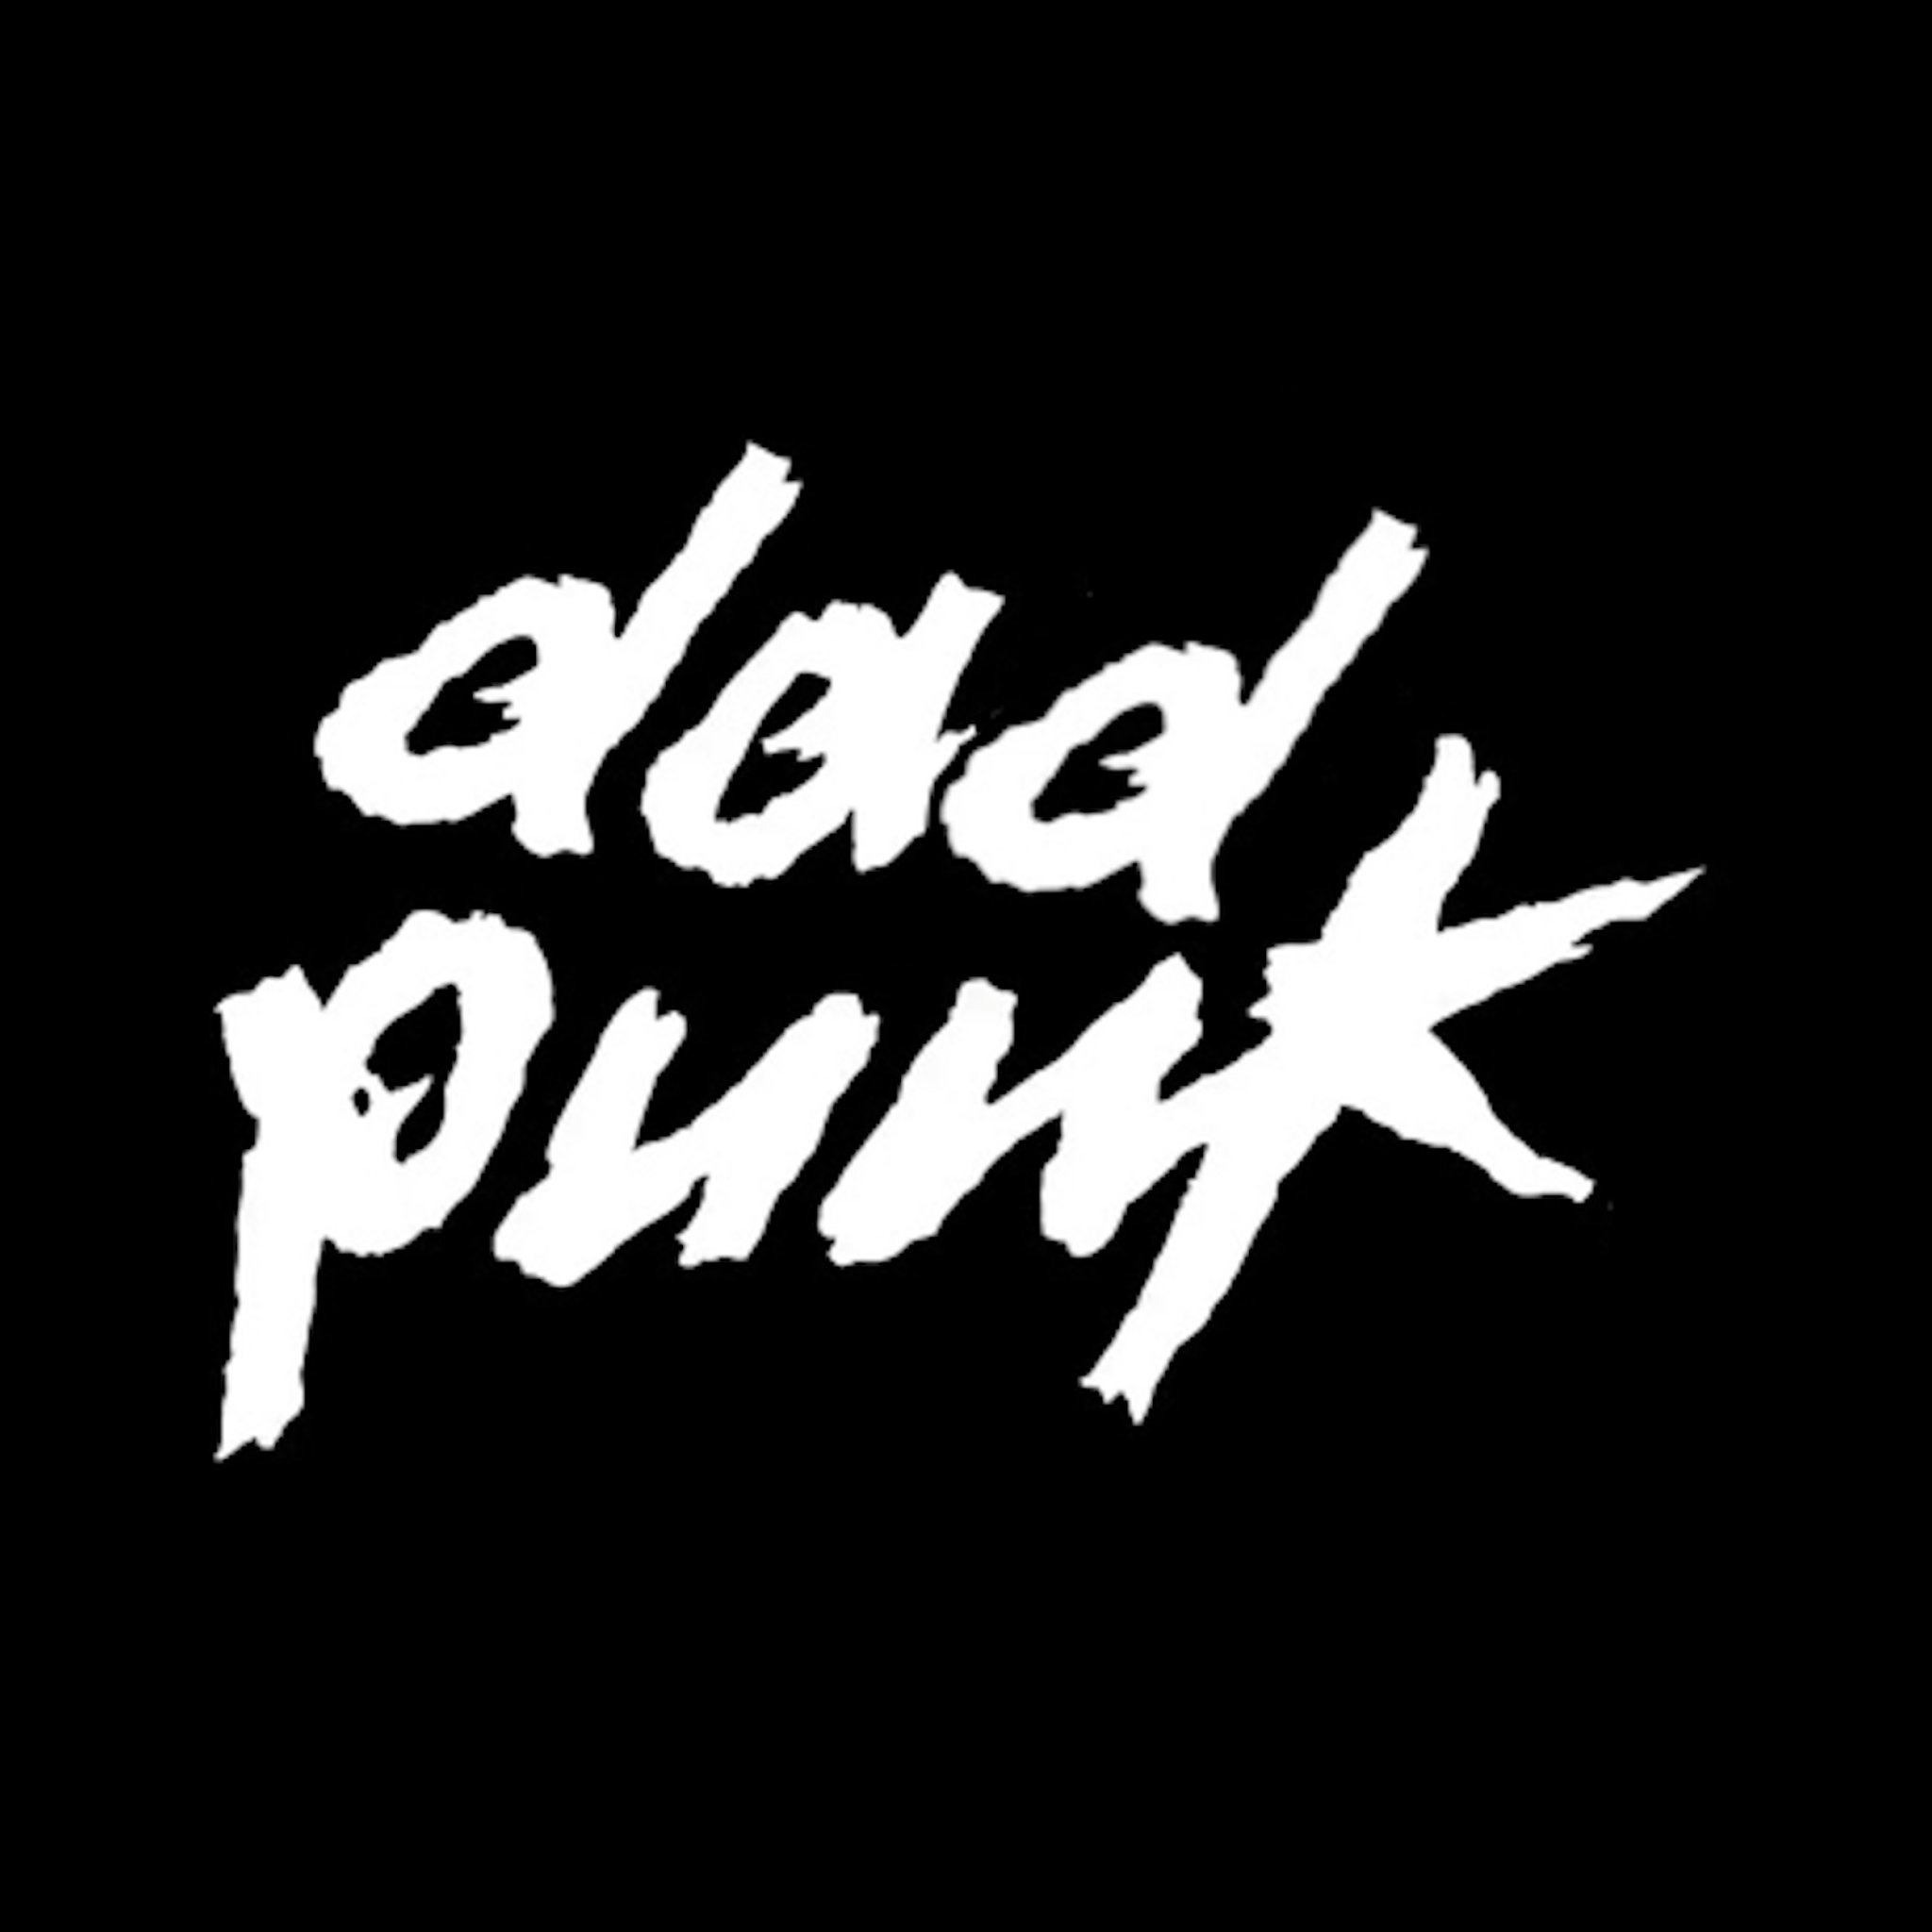 Dad Punk / EPB alter ego twitter account